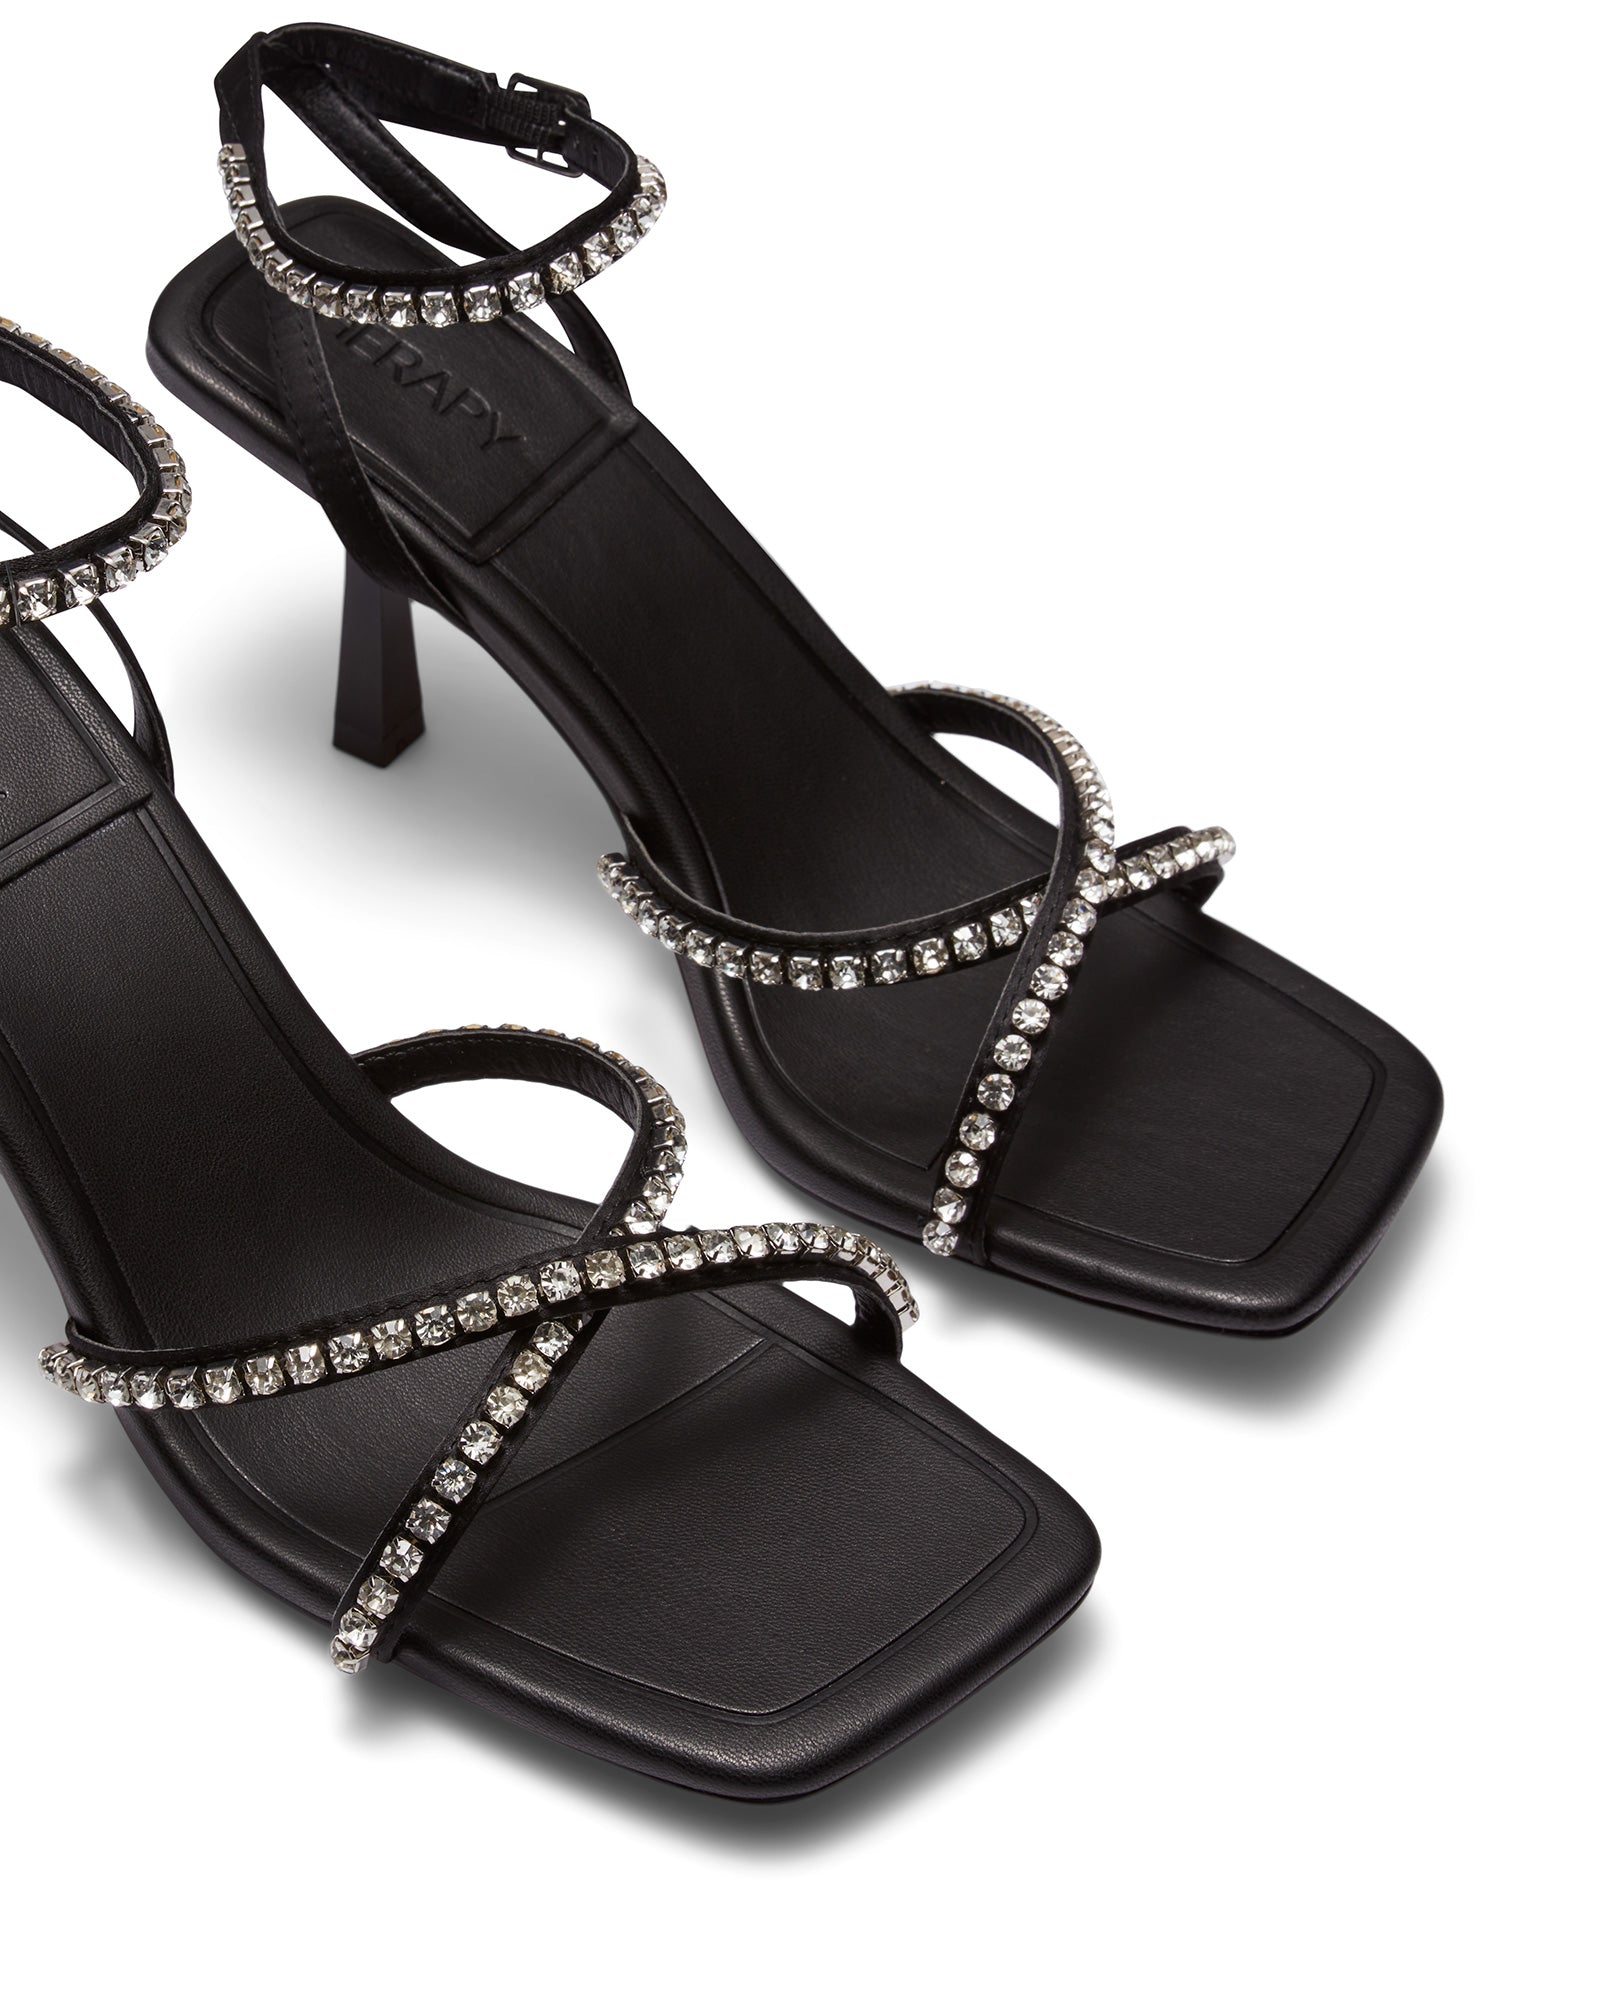 Therapy Shoes Doja Black | Women's Heels | Sandals | Stiletto | Diamante